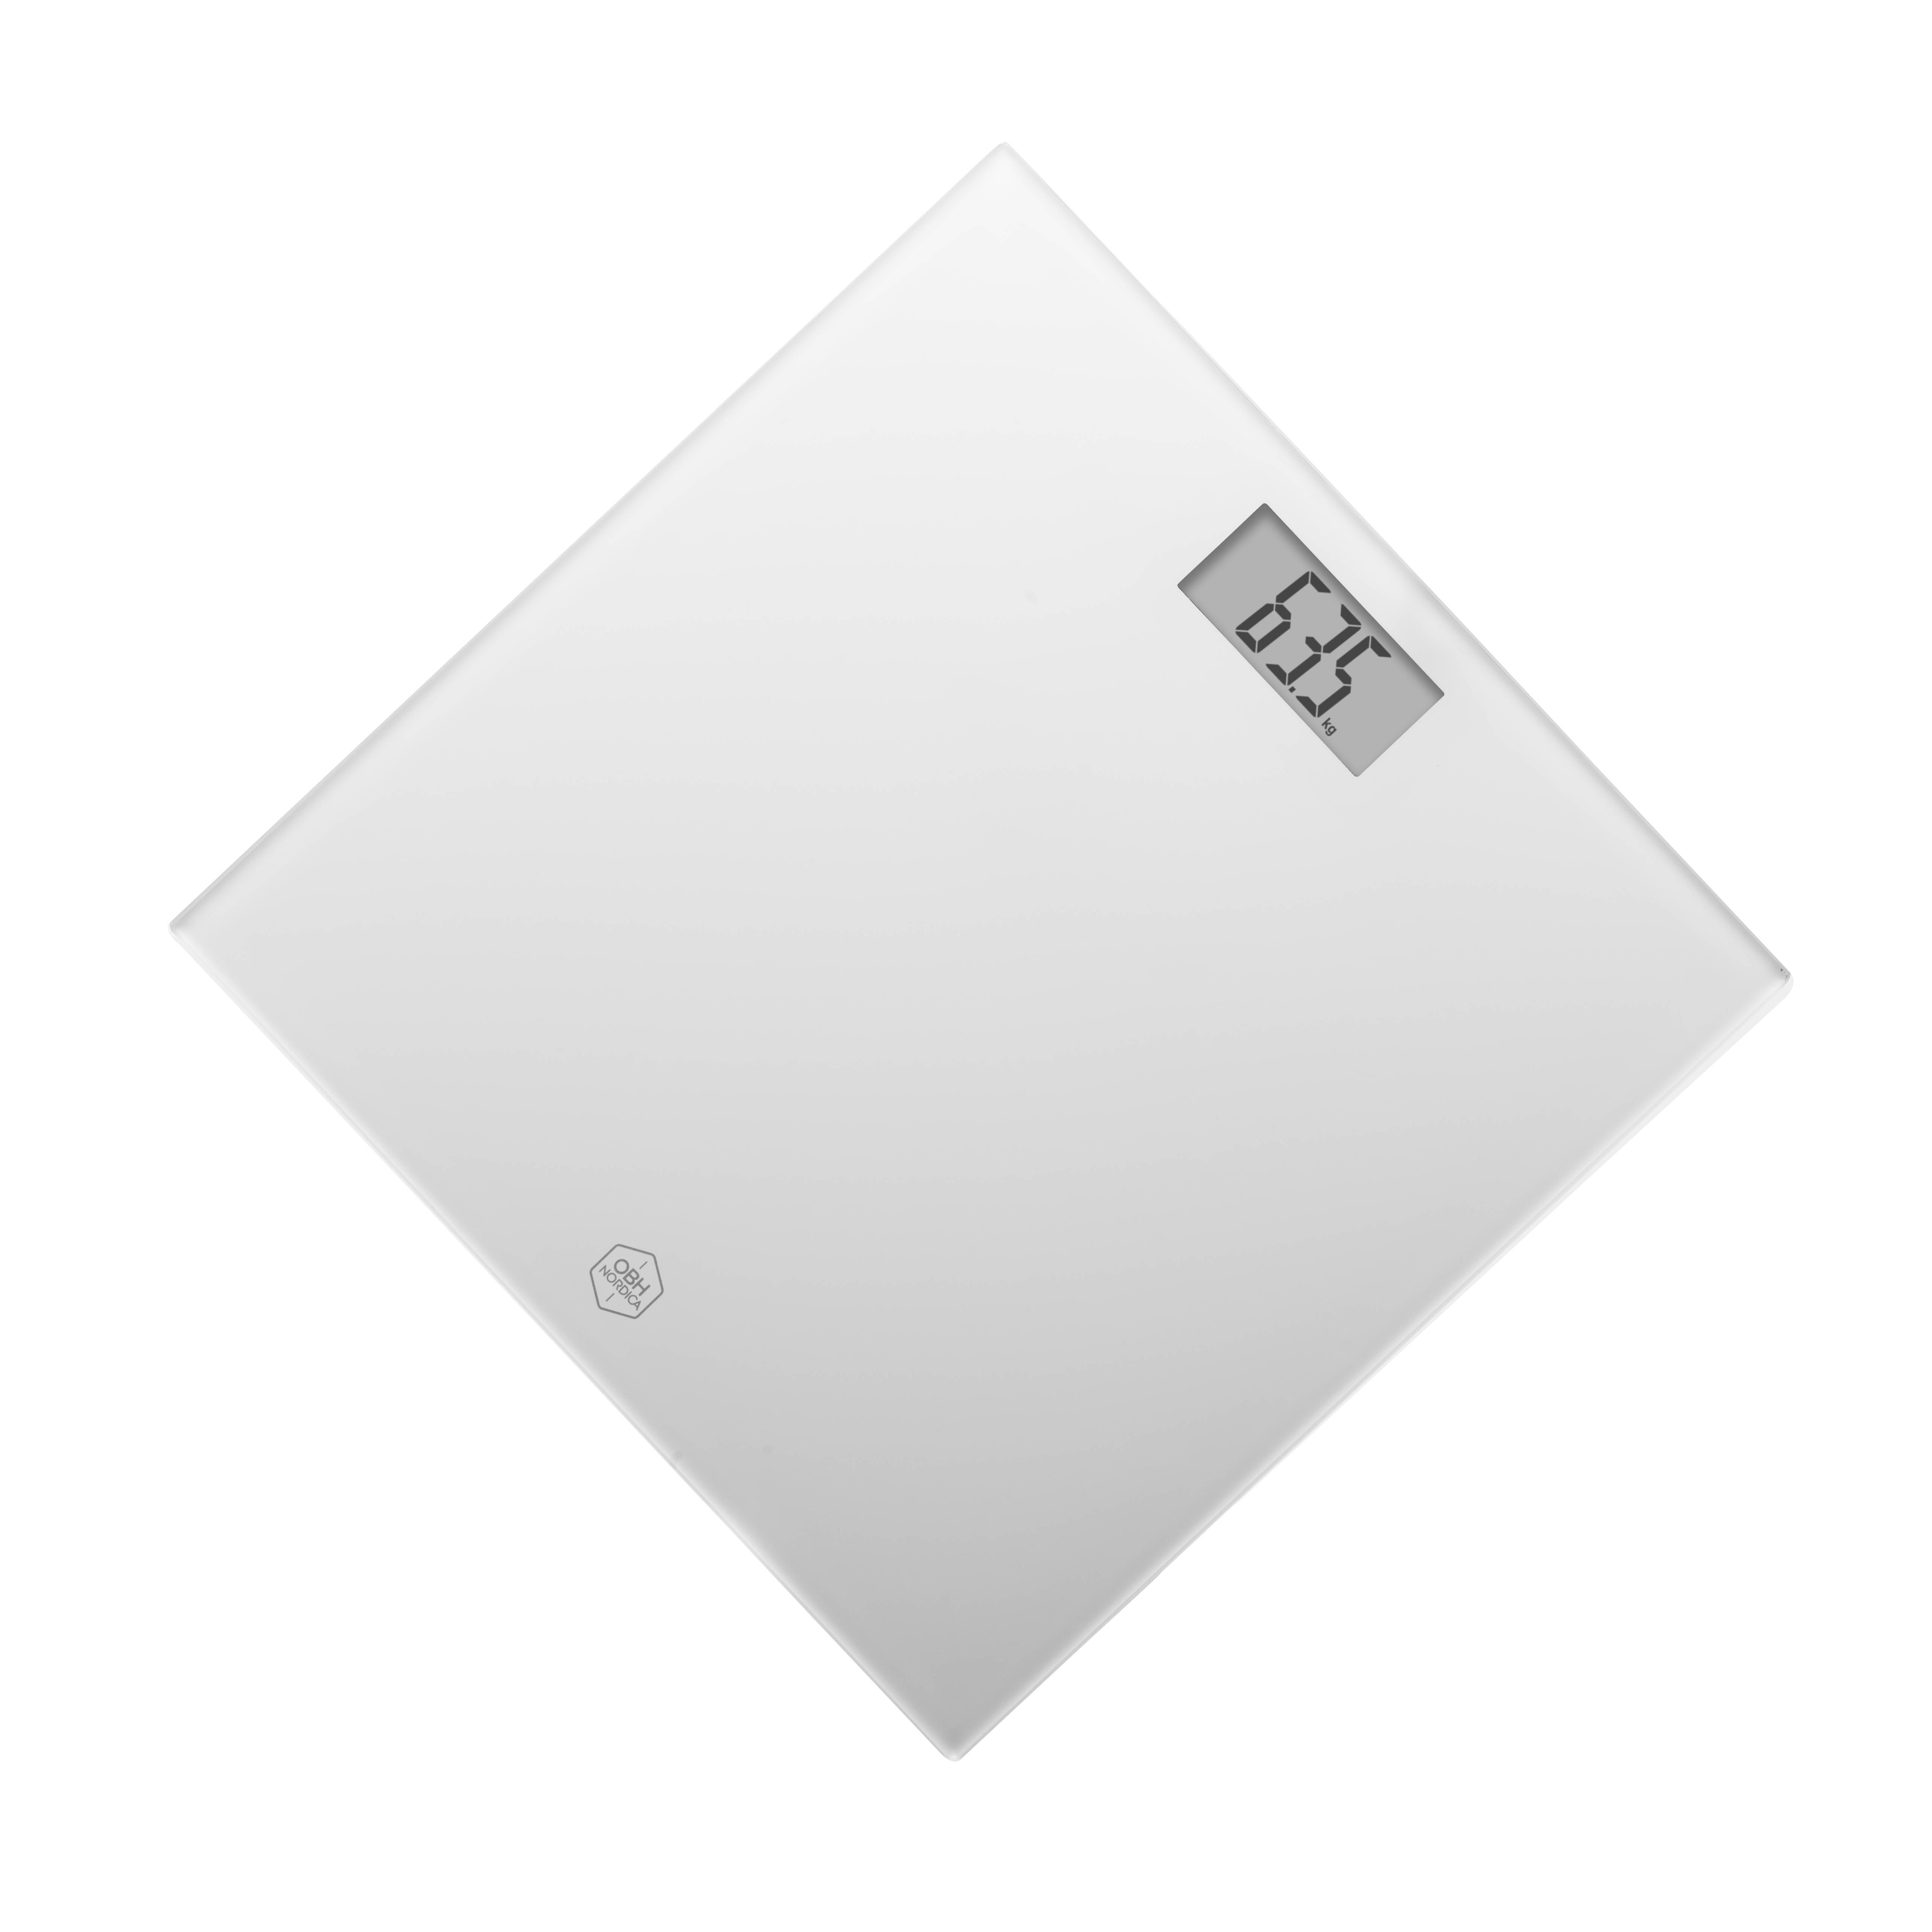 OBH Nordica - Classic Light Scale - White (EN1131N0)